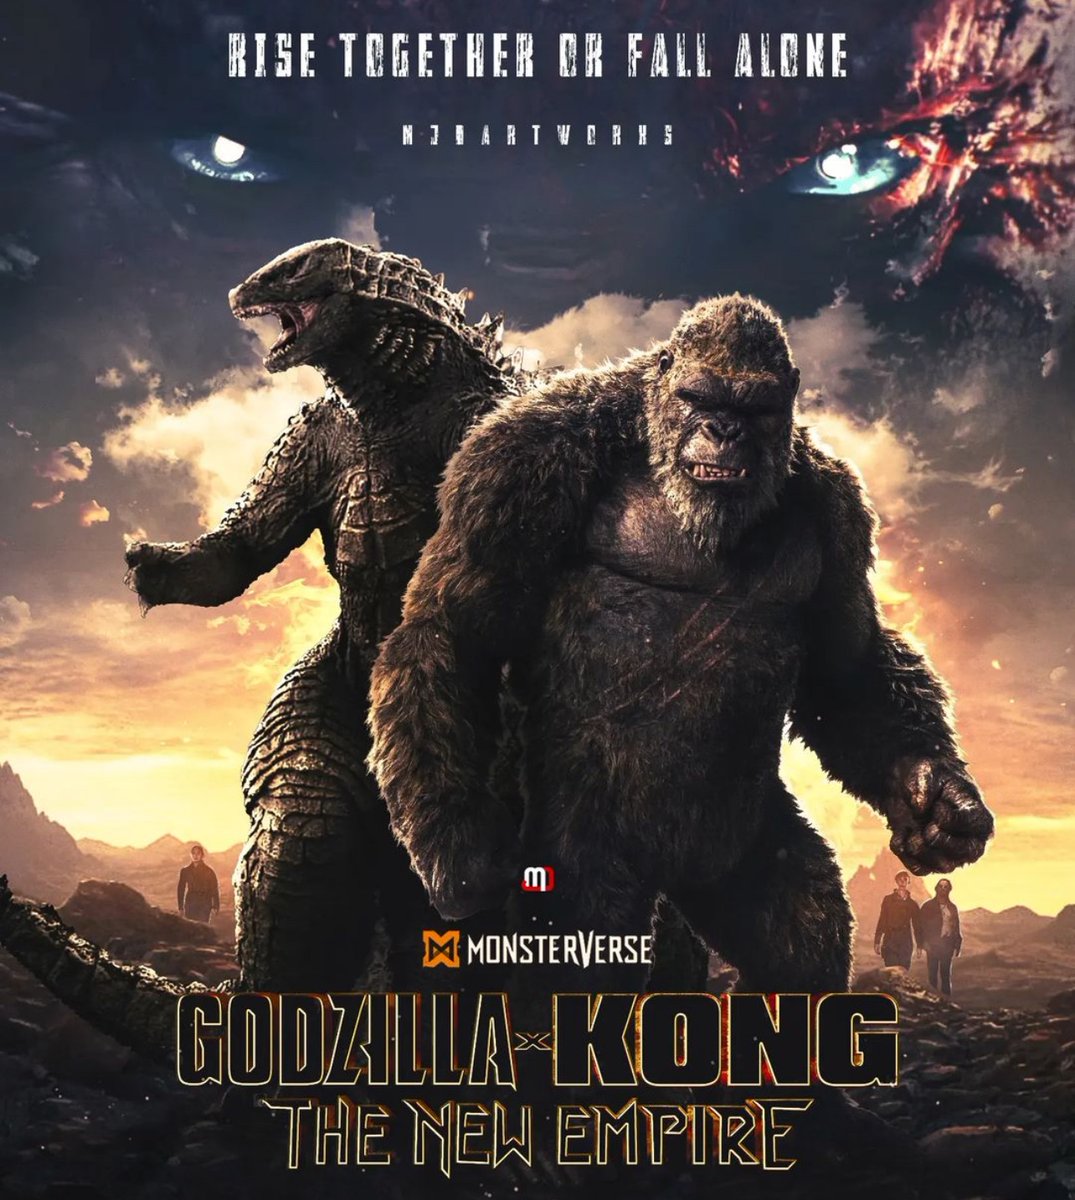 #GodzillaXKong releases digitally 5/14